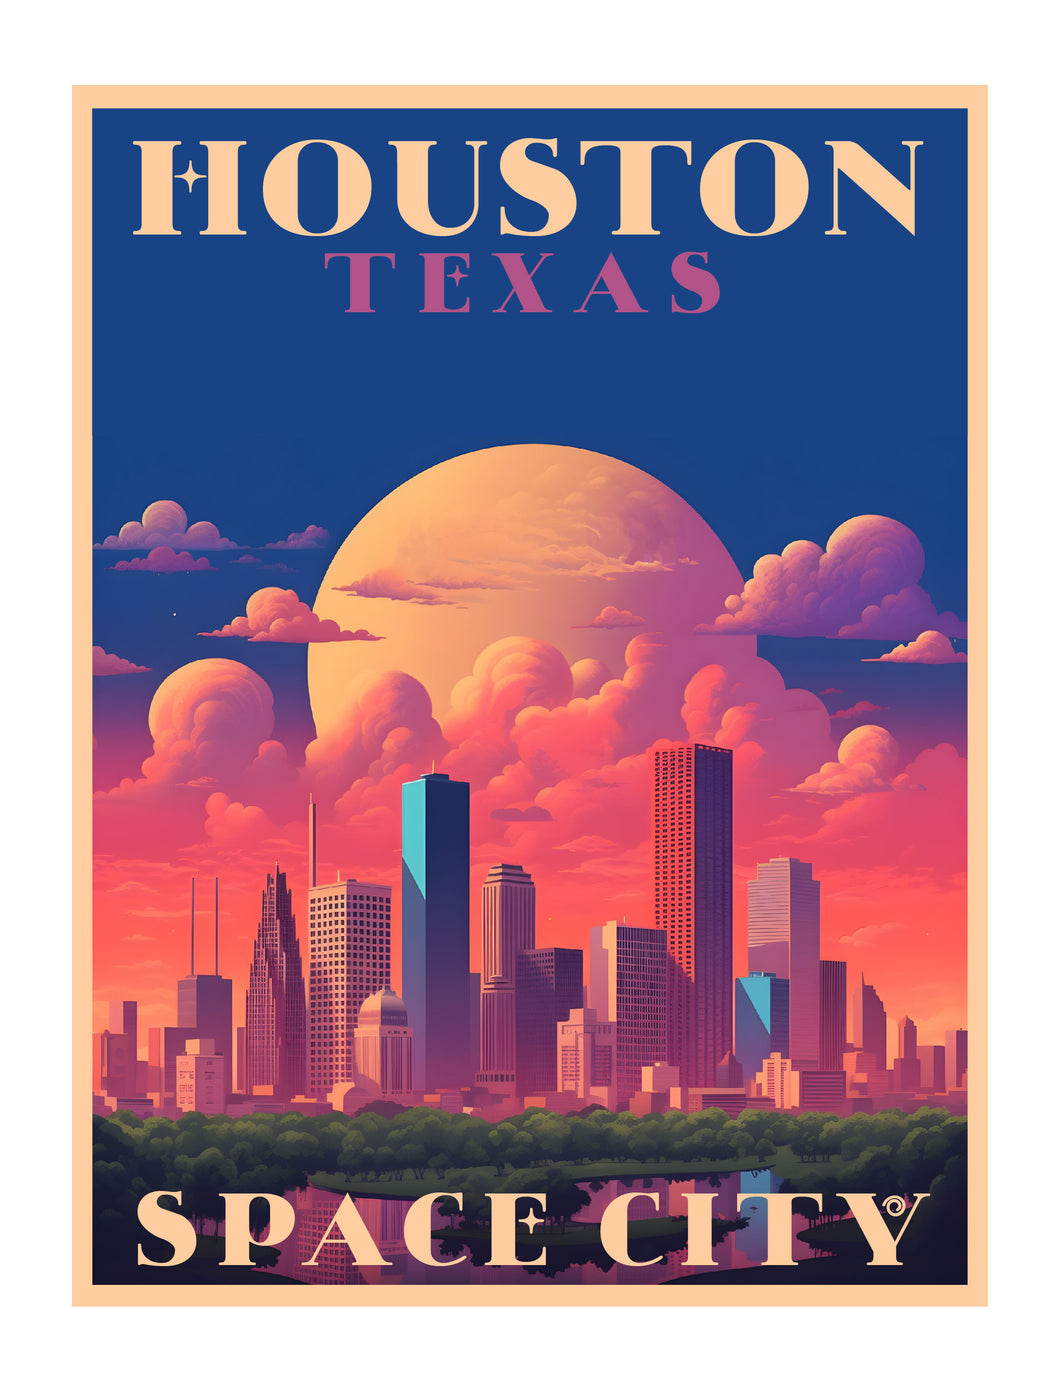 Exclusive Houston Texas Collectible - Vintage Travel Poster Art